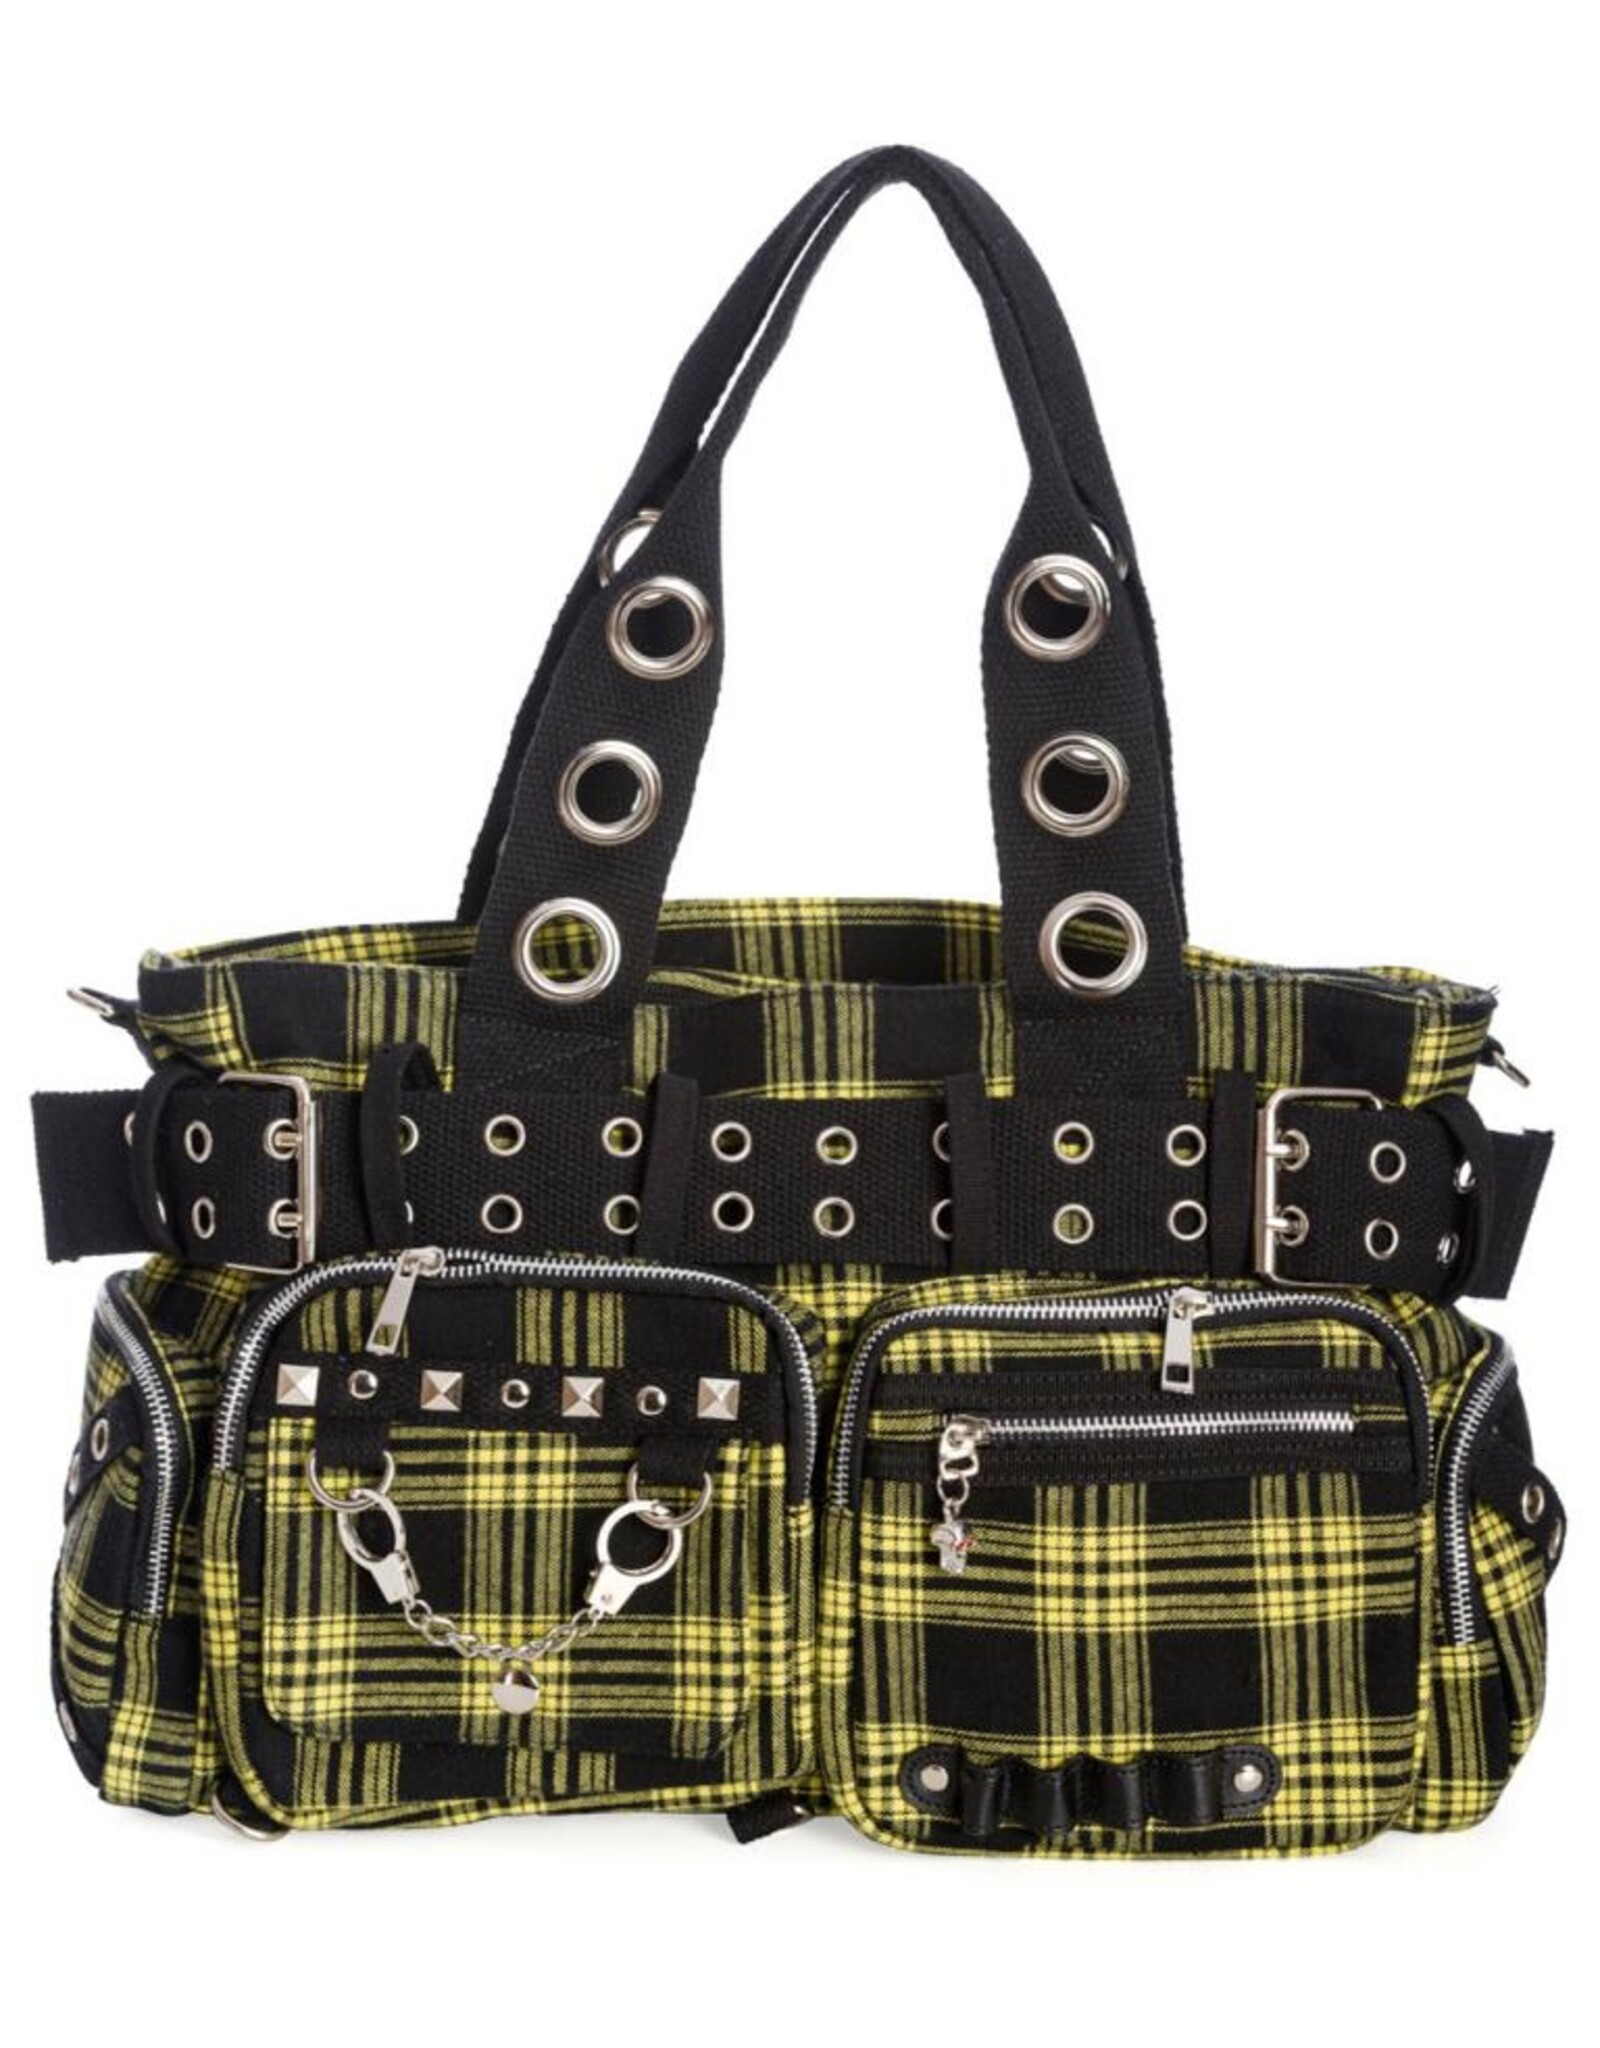 Banned Gothic bags Steampunk bags - Banned Camdyn Tartan Handbag Yellow